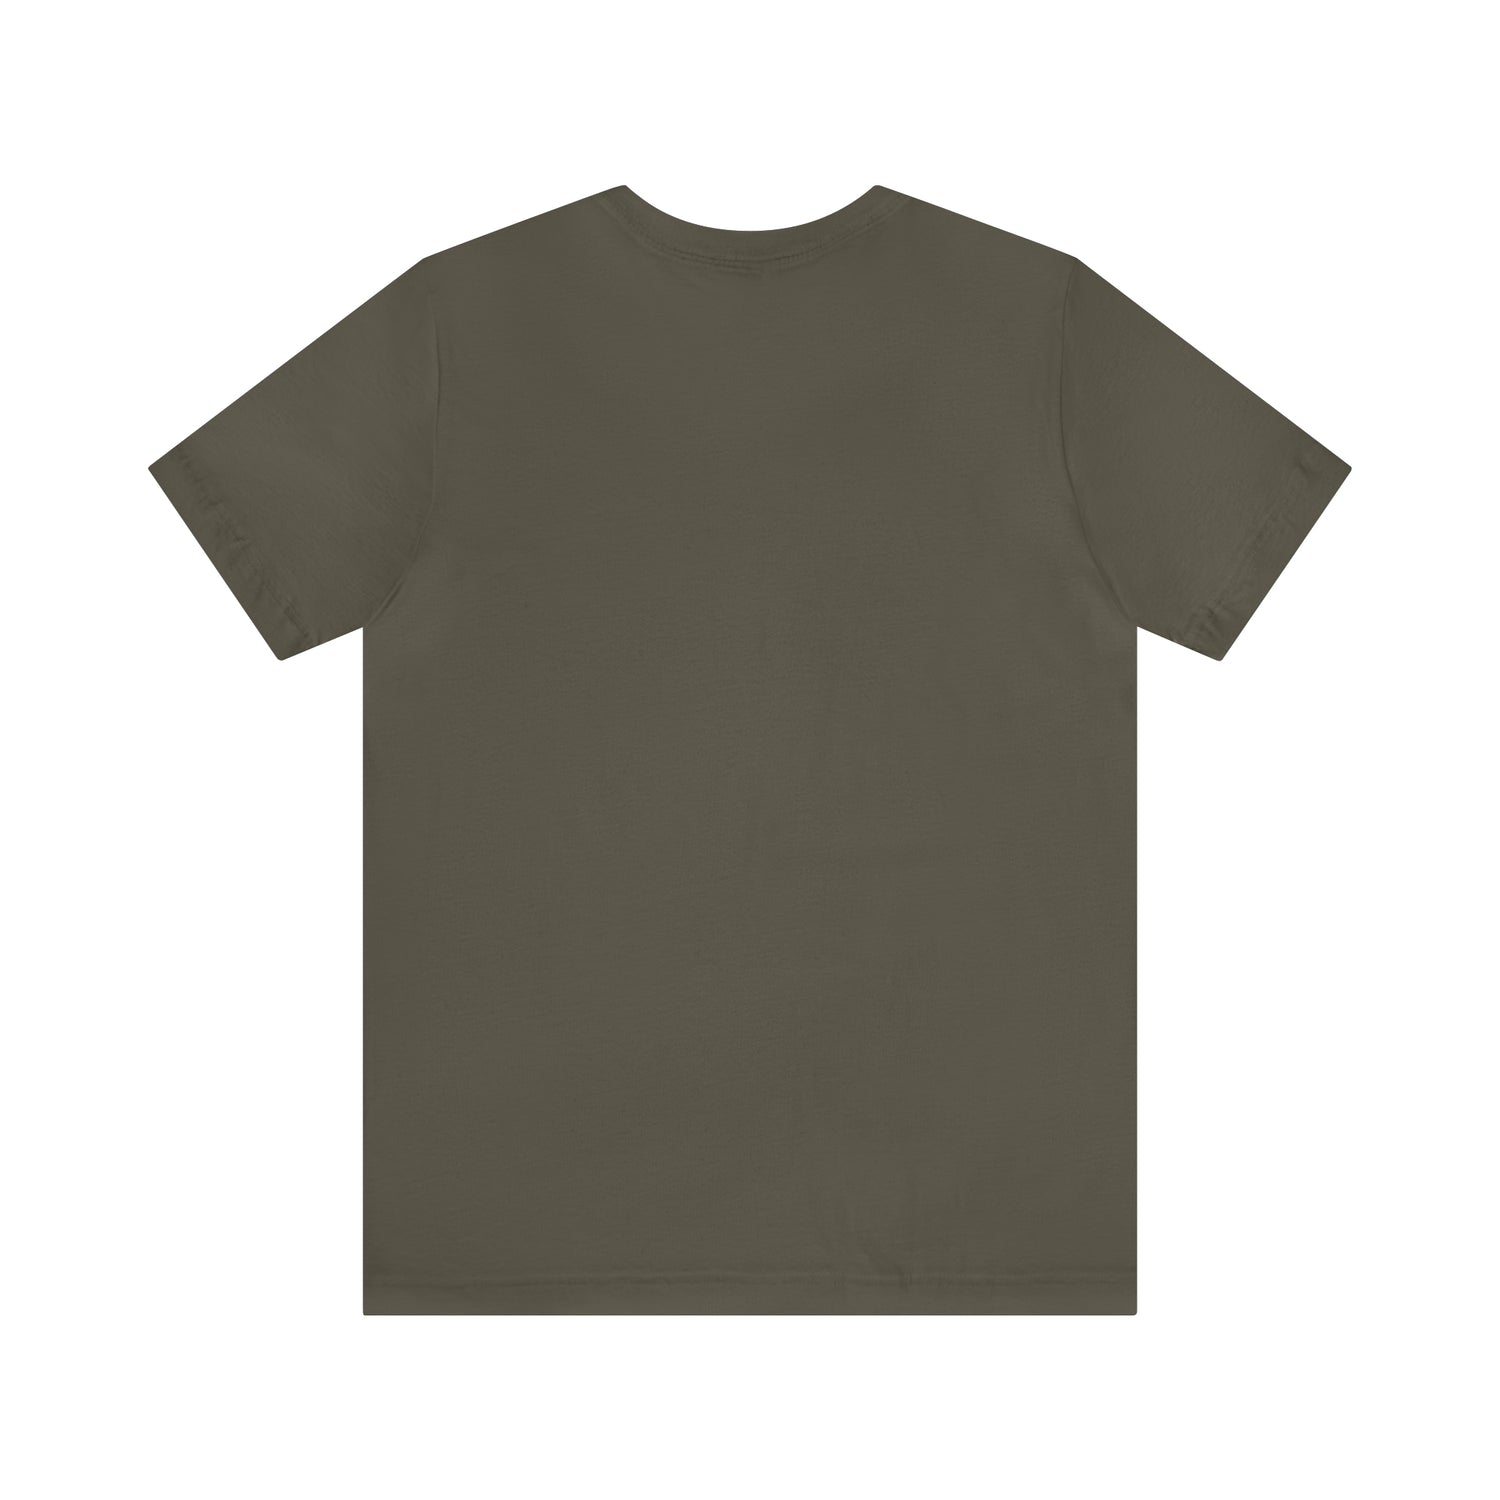 For Fall | Fall Season Gift Idea | Autumn T-Shirt T-Shirt Petrova Designs